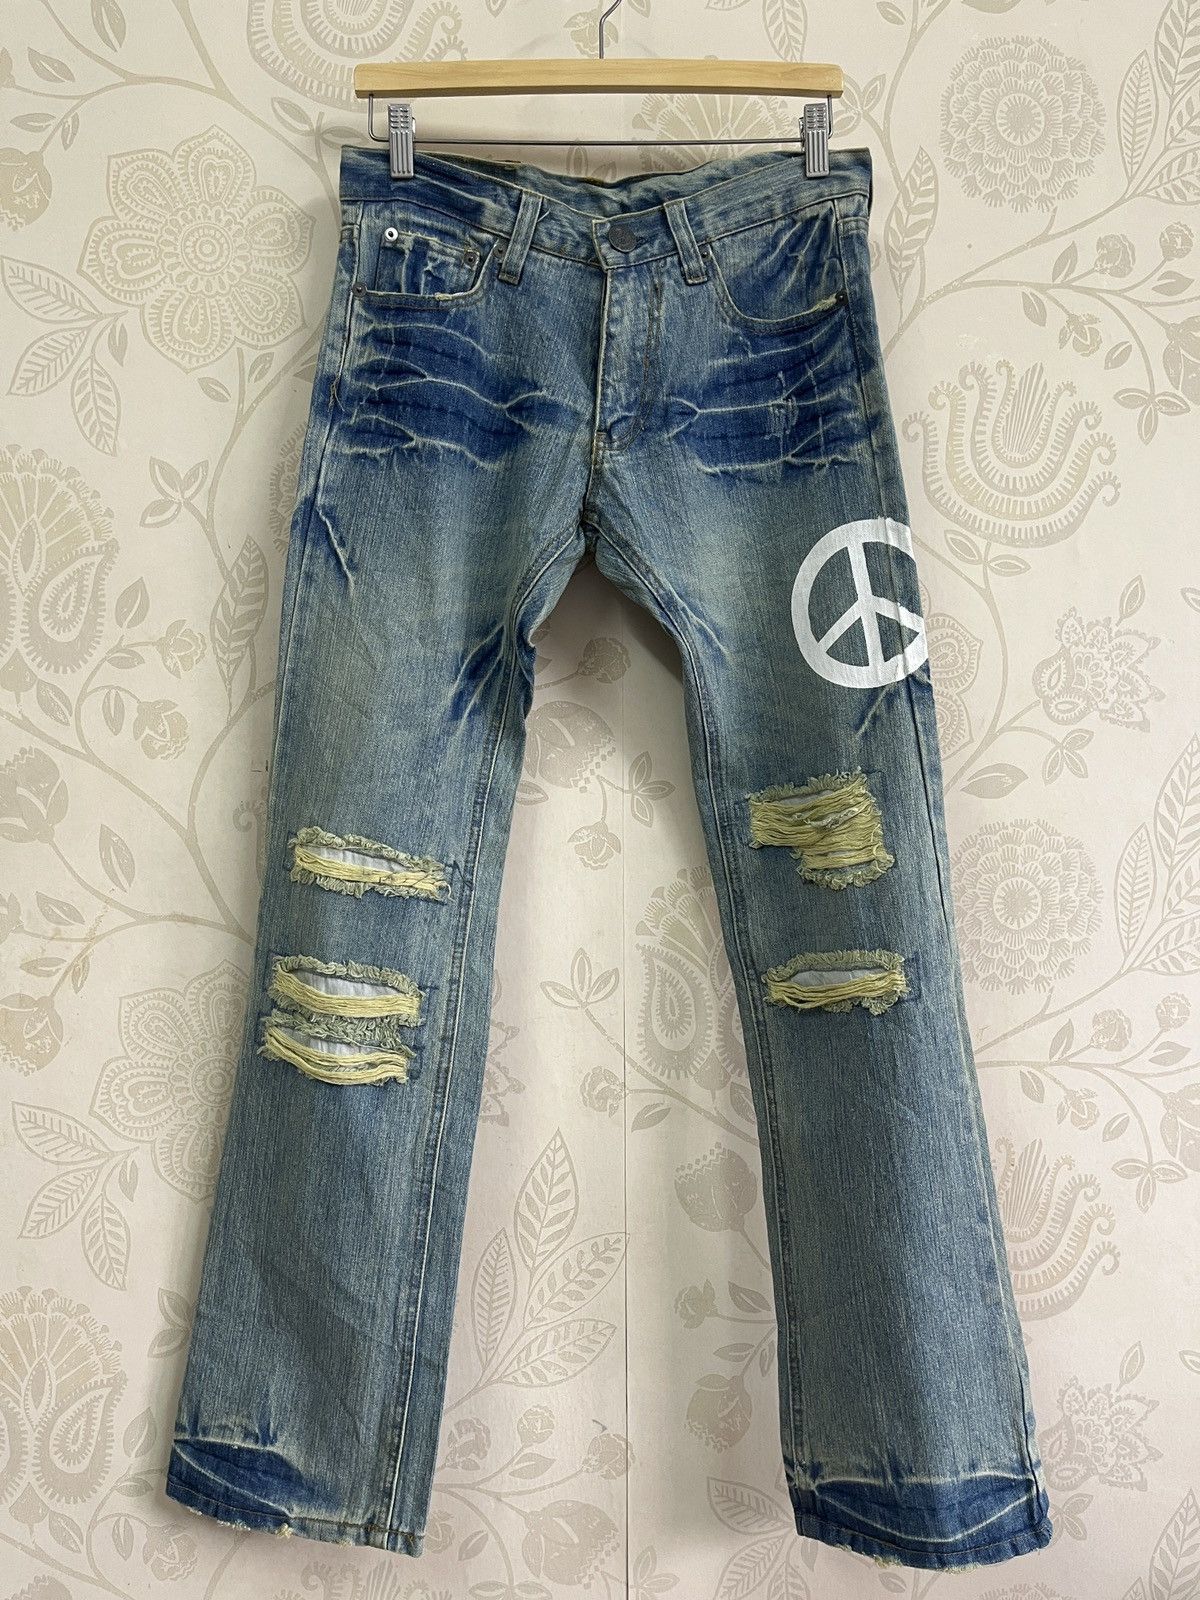 Distressed Hippies Peace Vintage Japan Jeans Acid Wash 30X32 - 2